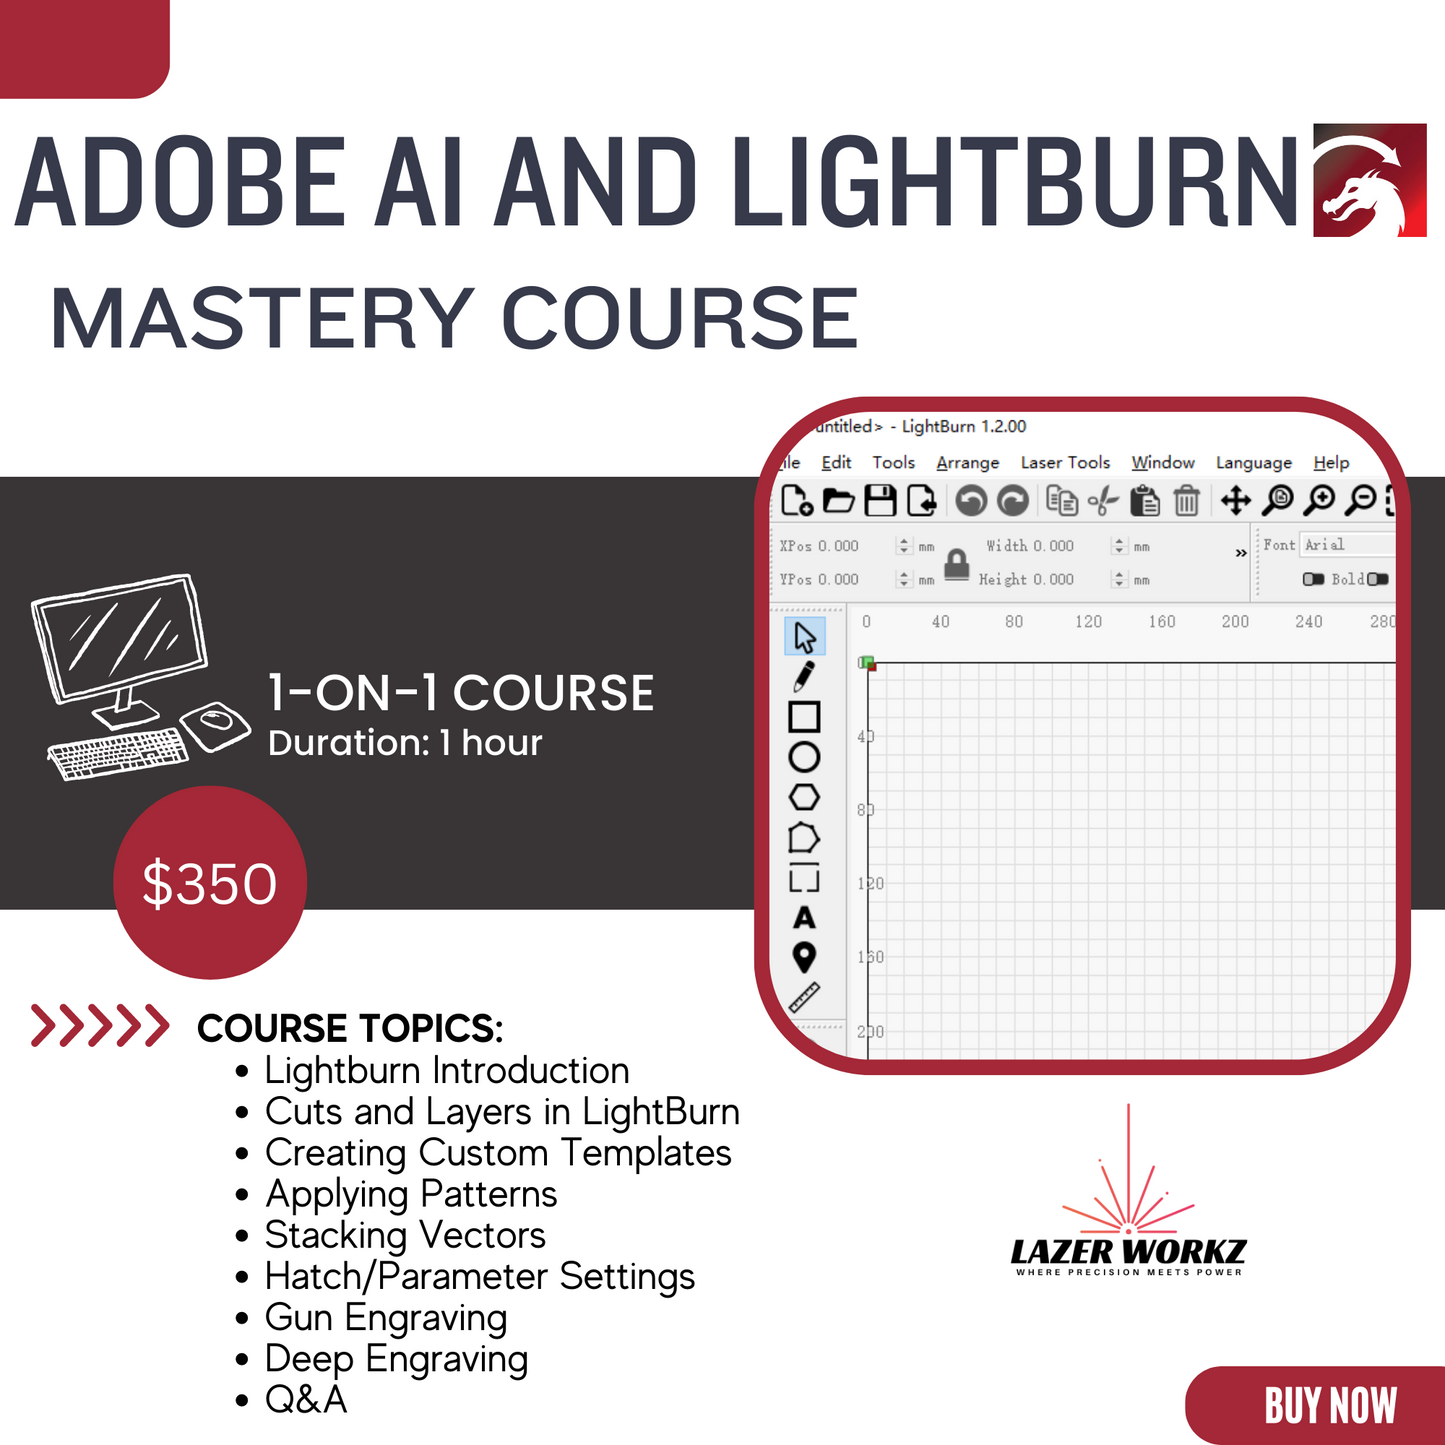 Adobe AI and Lightburn Mastery Course